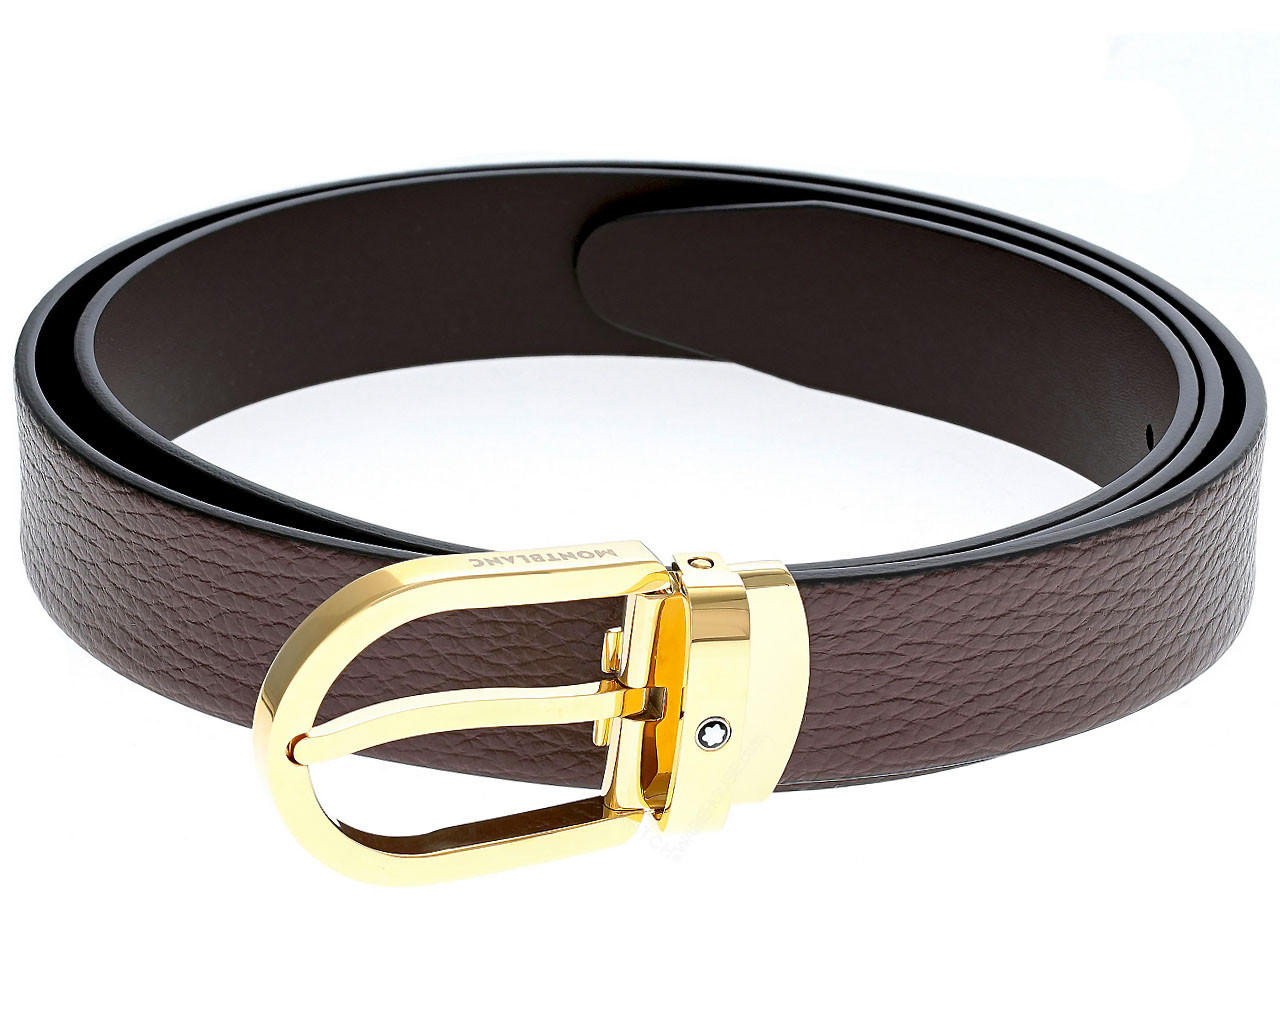 Shape leather belt Louis Vuitton Black size L International in